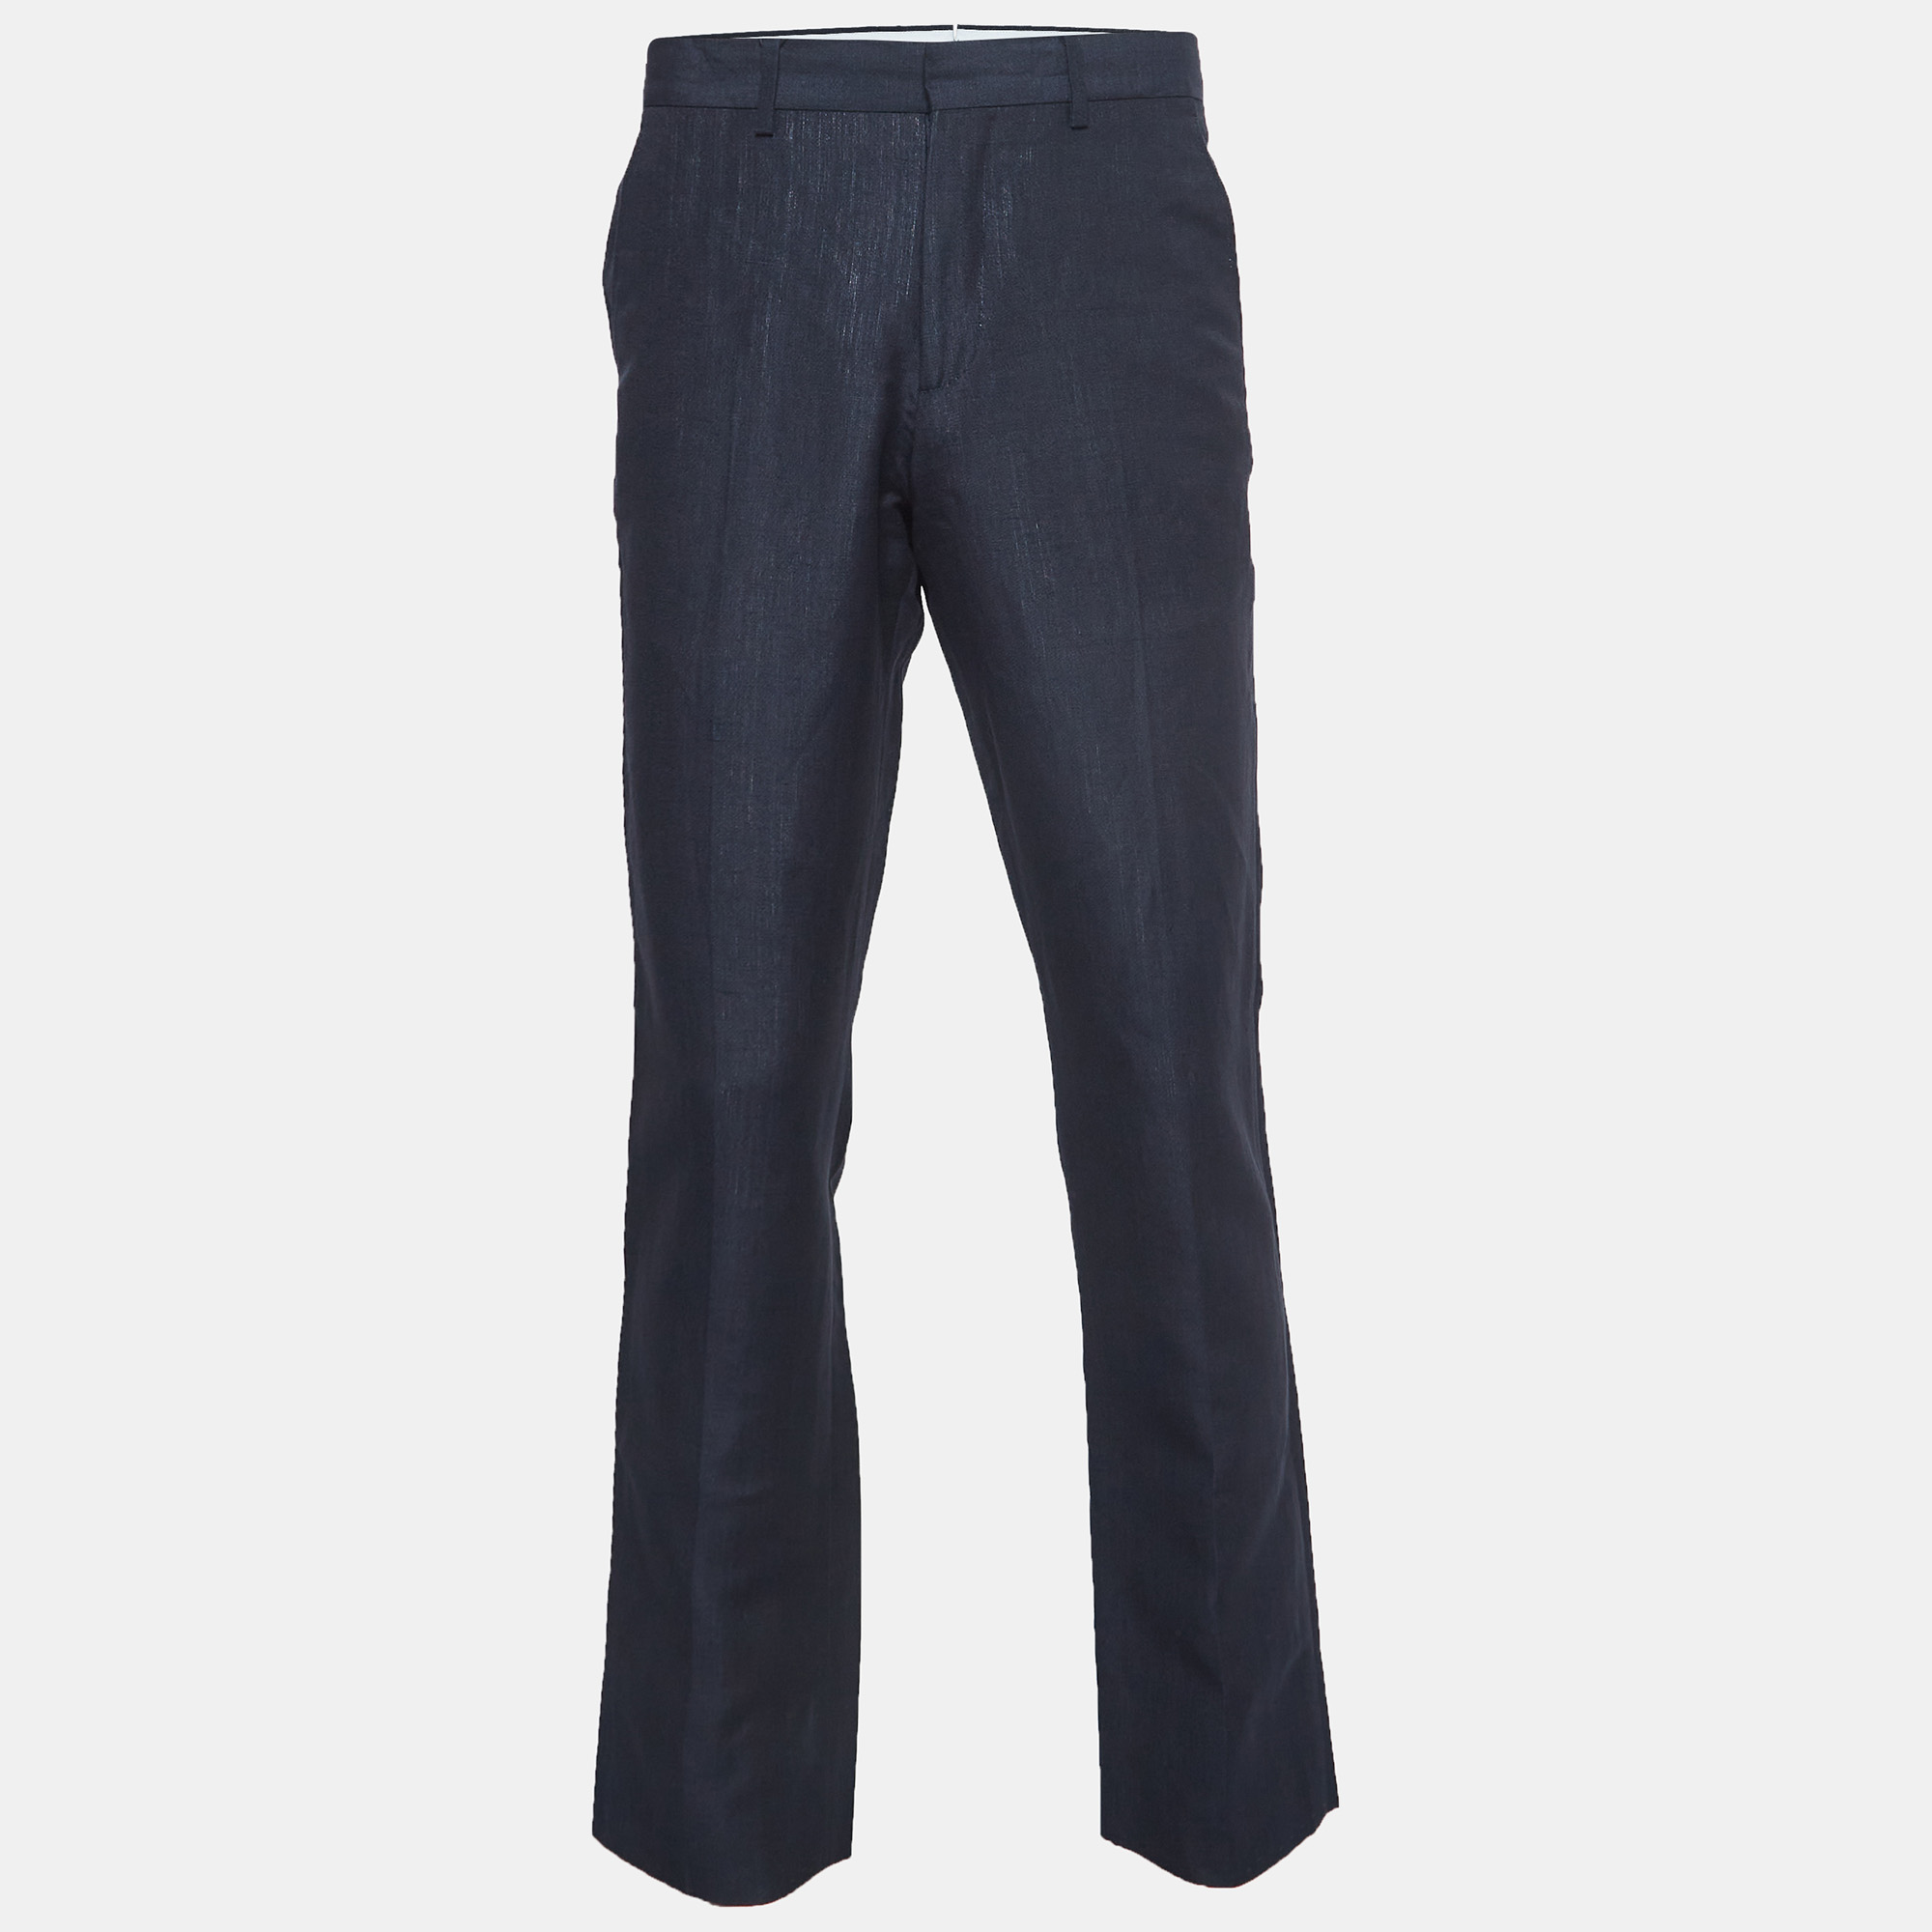 Burberry navy blue linen blend classic trousers m